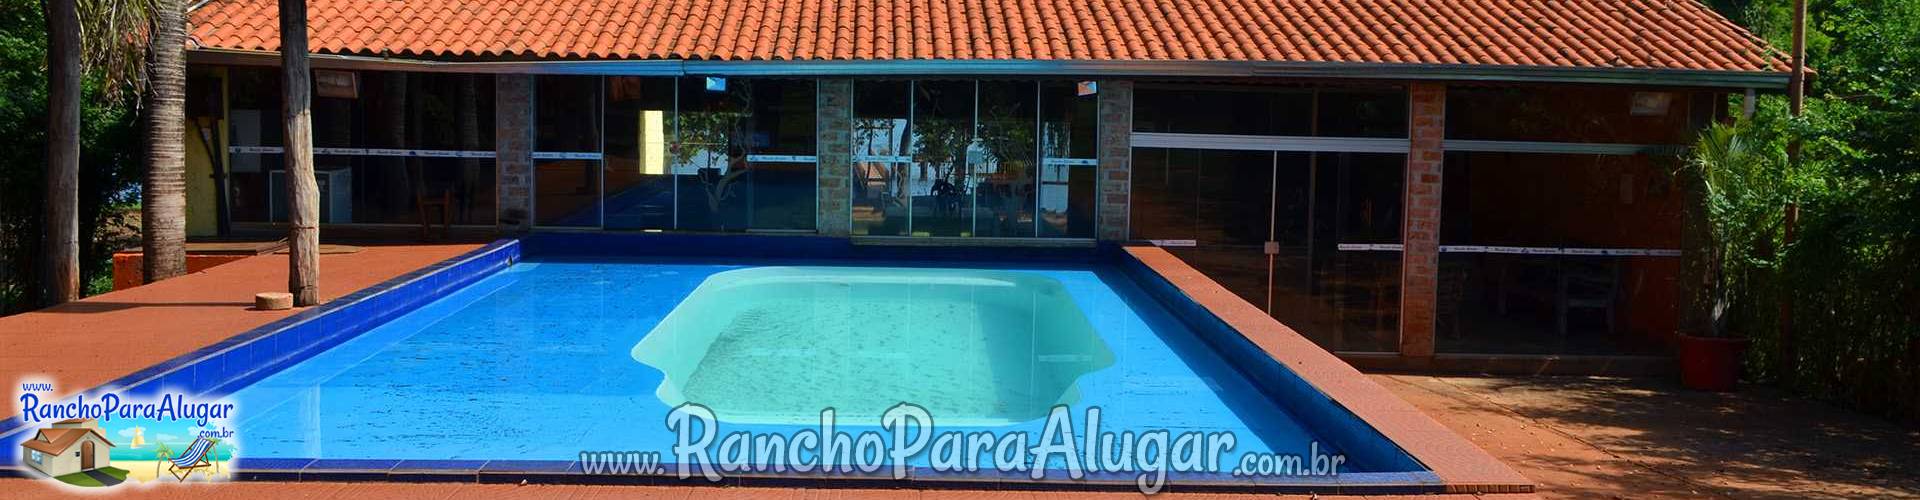 Rancho Giroldo 2 para Alugar em Miguelopolis